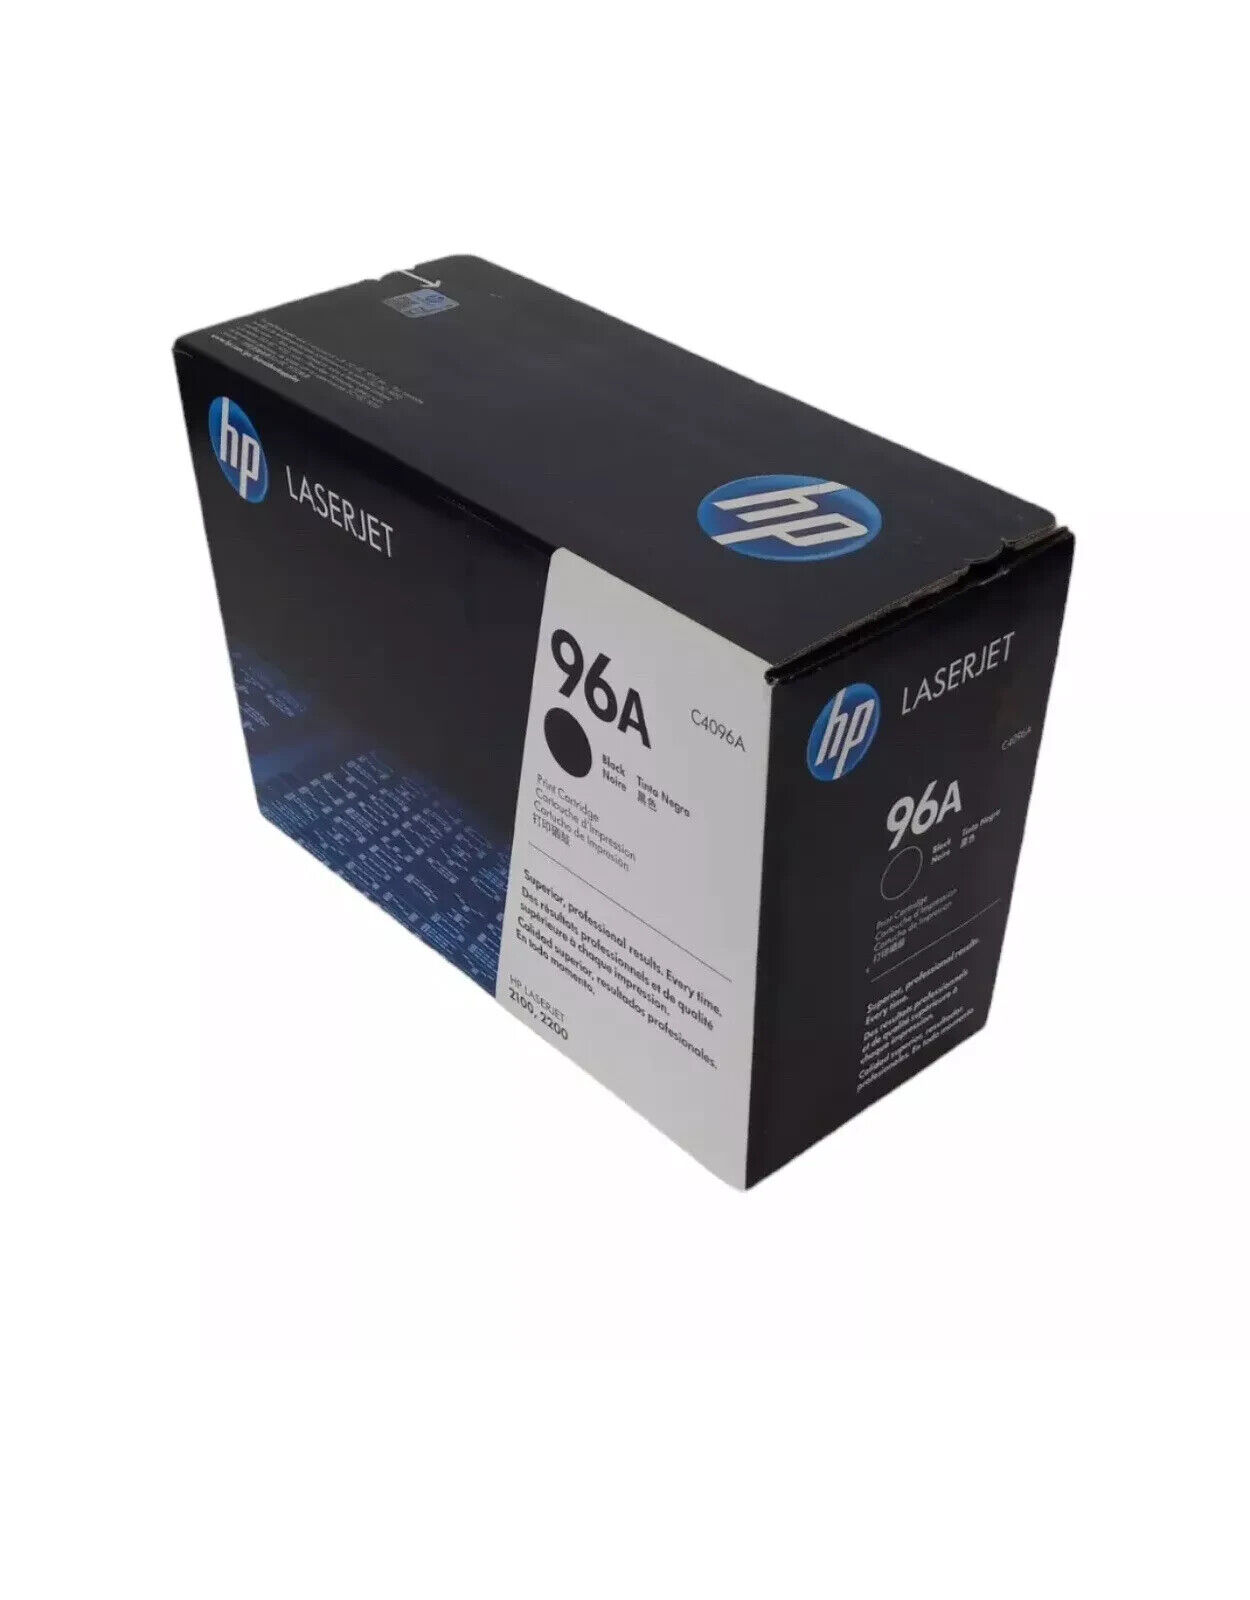 4 X Genuine HP LaserJet 2100 2200 2100xi Black Toner Cartridges HP 96A C4096A